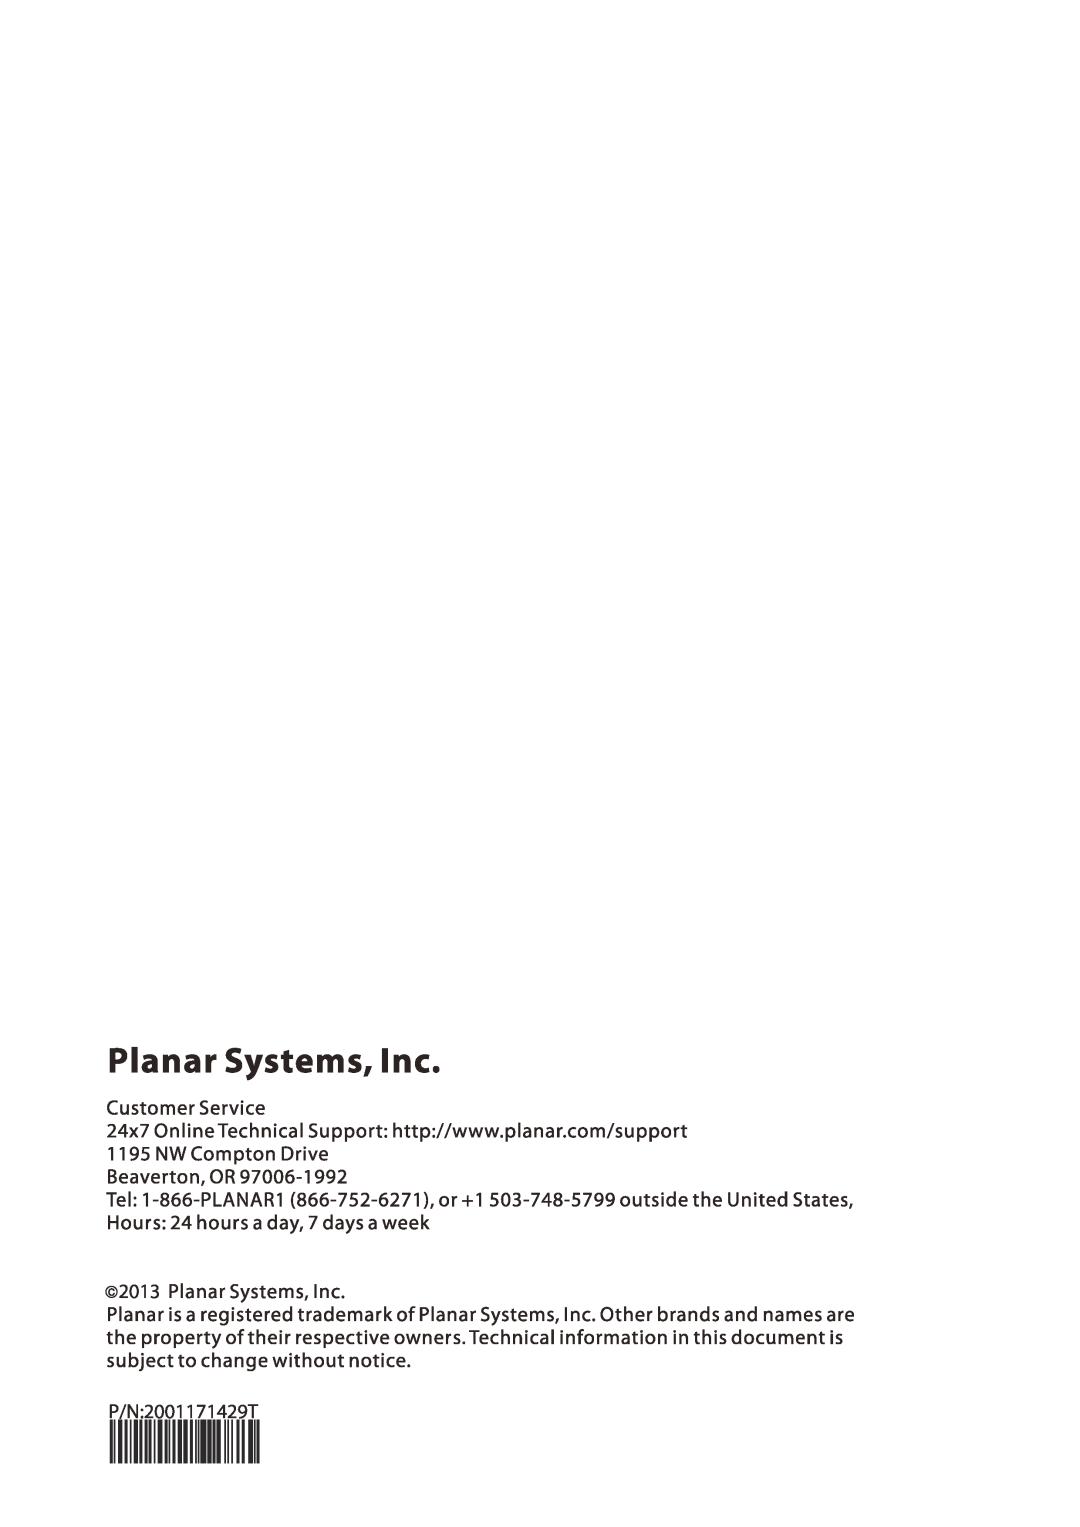 Planar PL1500M manual 2013, P/N2001171429T 